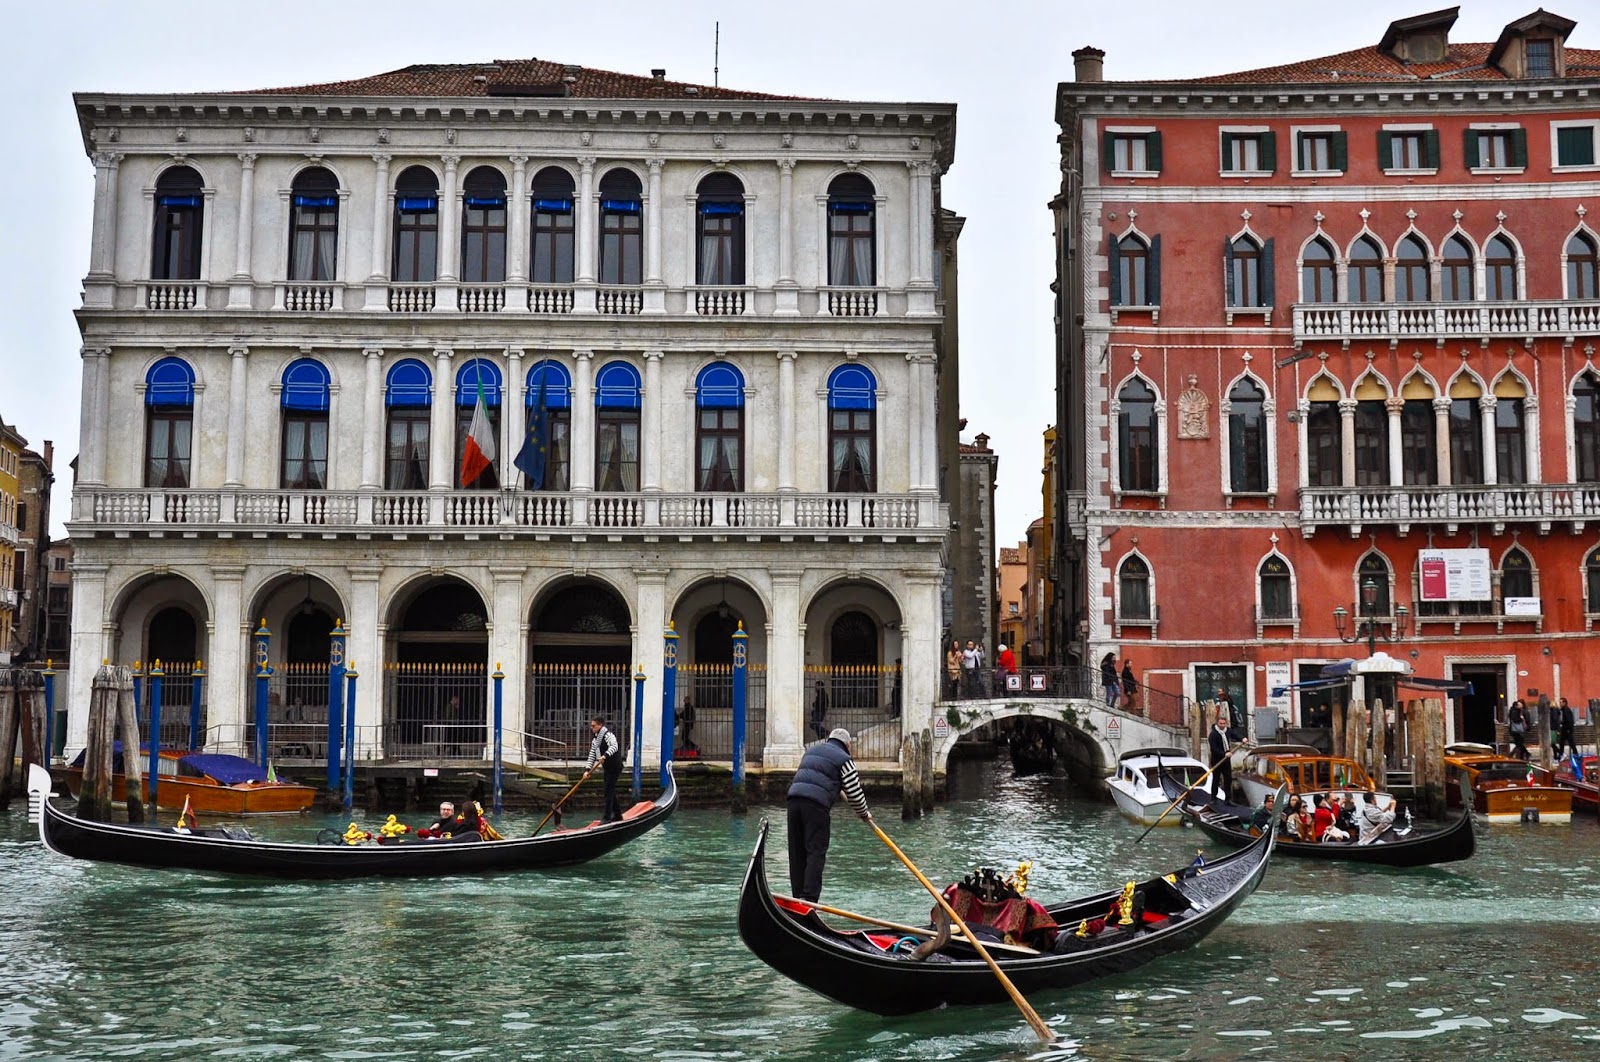 Gondola rush hour in Venice